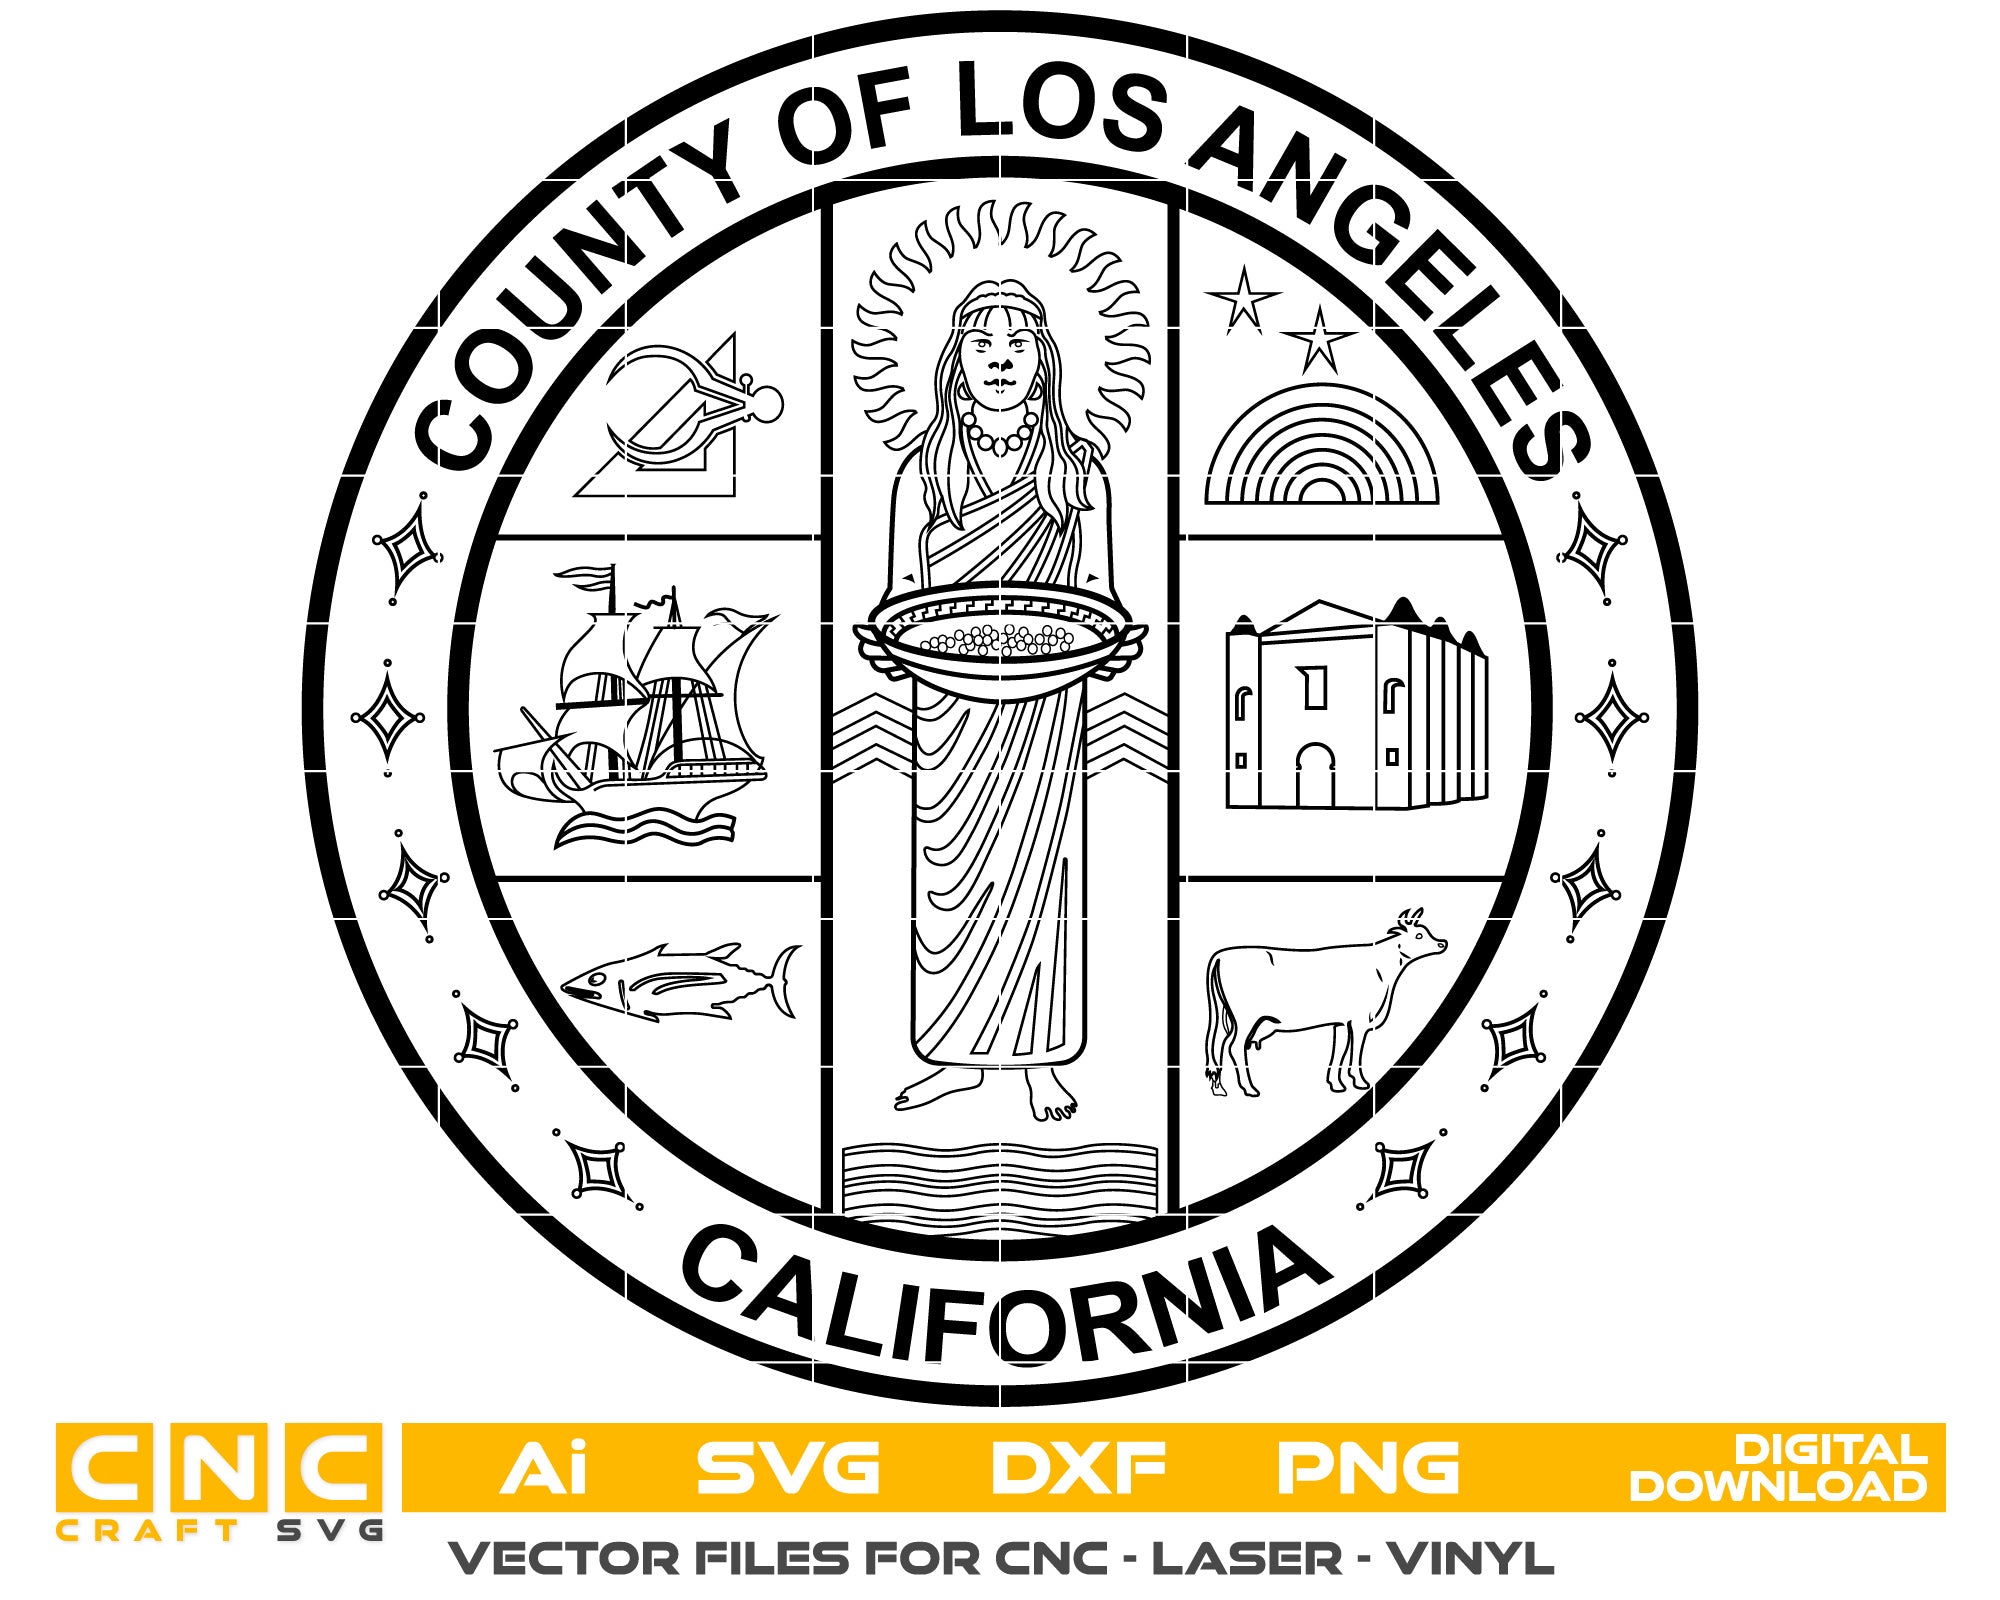 County of Los Angeles California Seal vector art